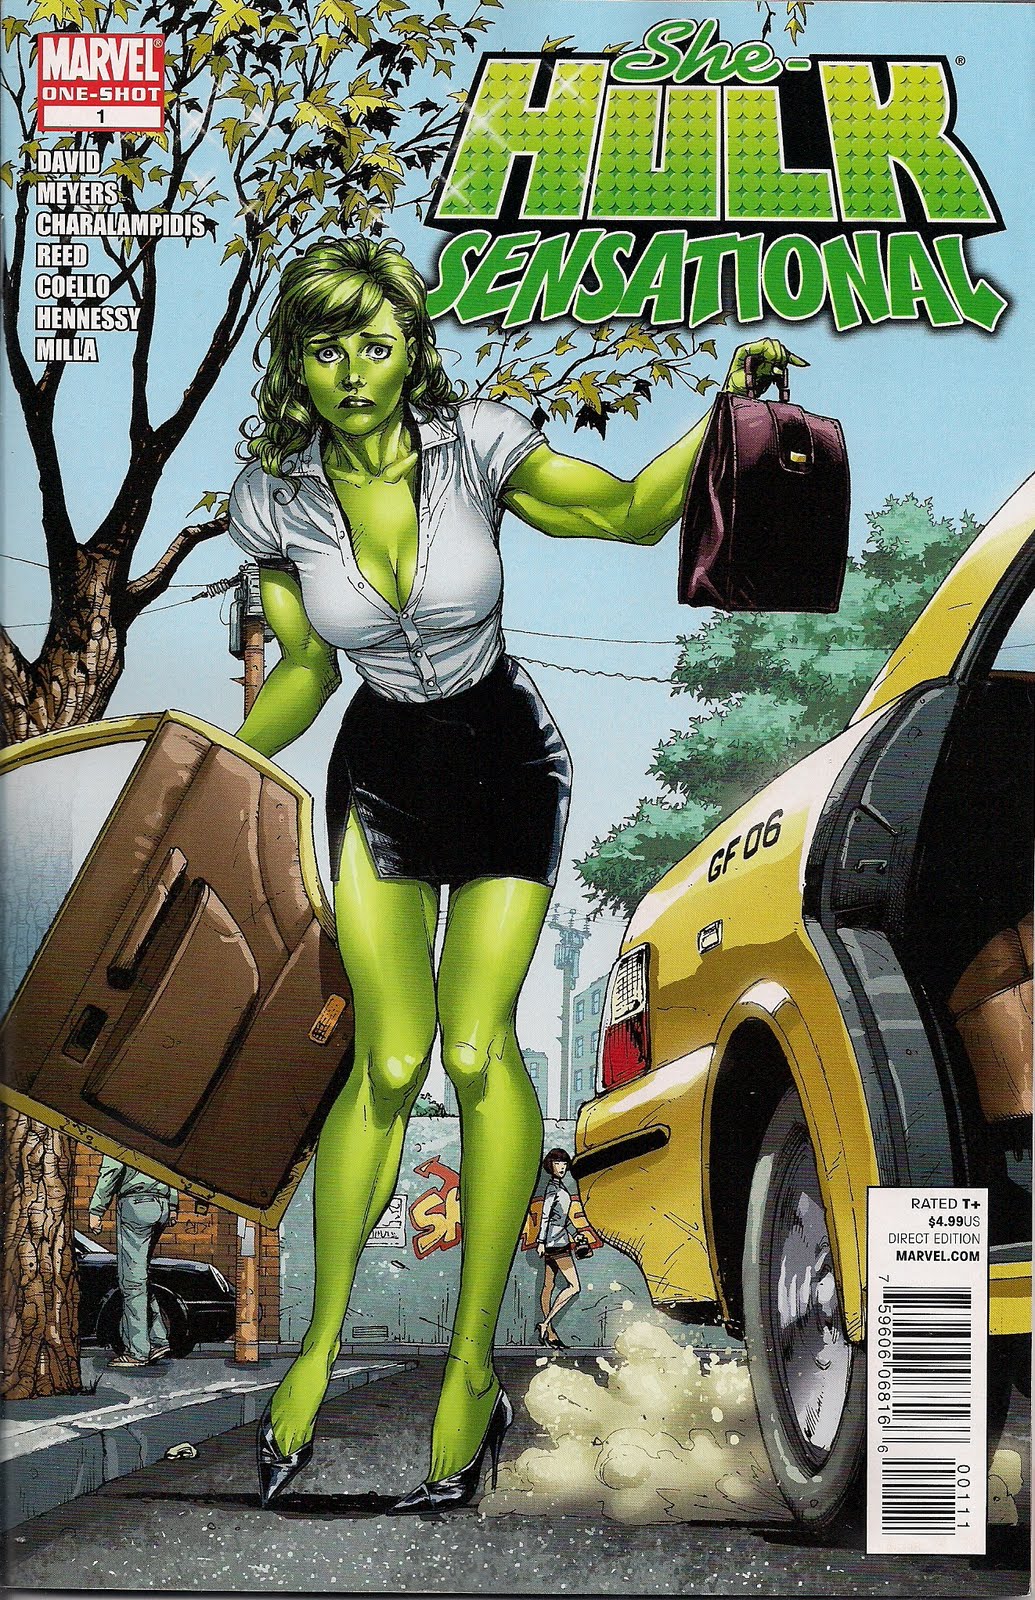 The Sensational She-Hulk #1 Review – Weird Science Marvel Comics